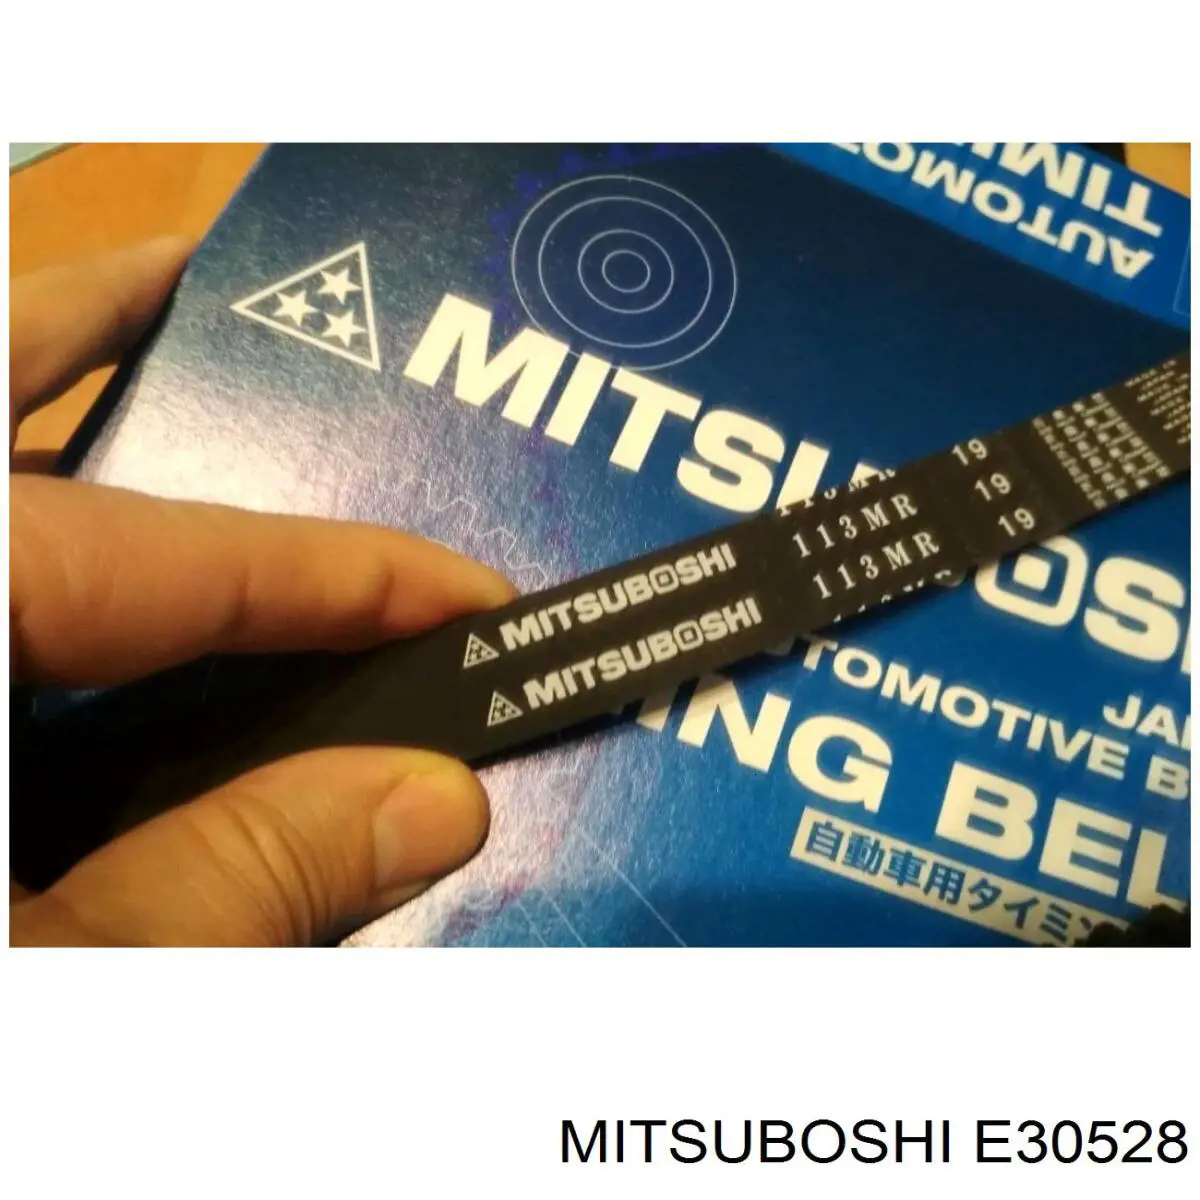 E30528 Mitsuboshi ремень грм